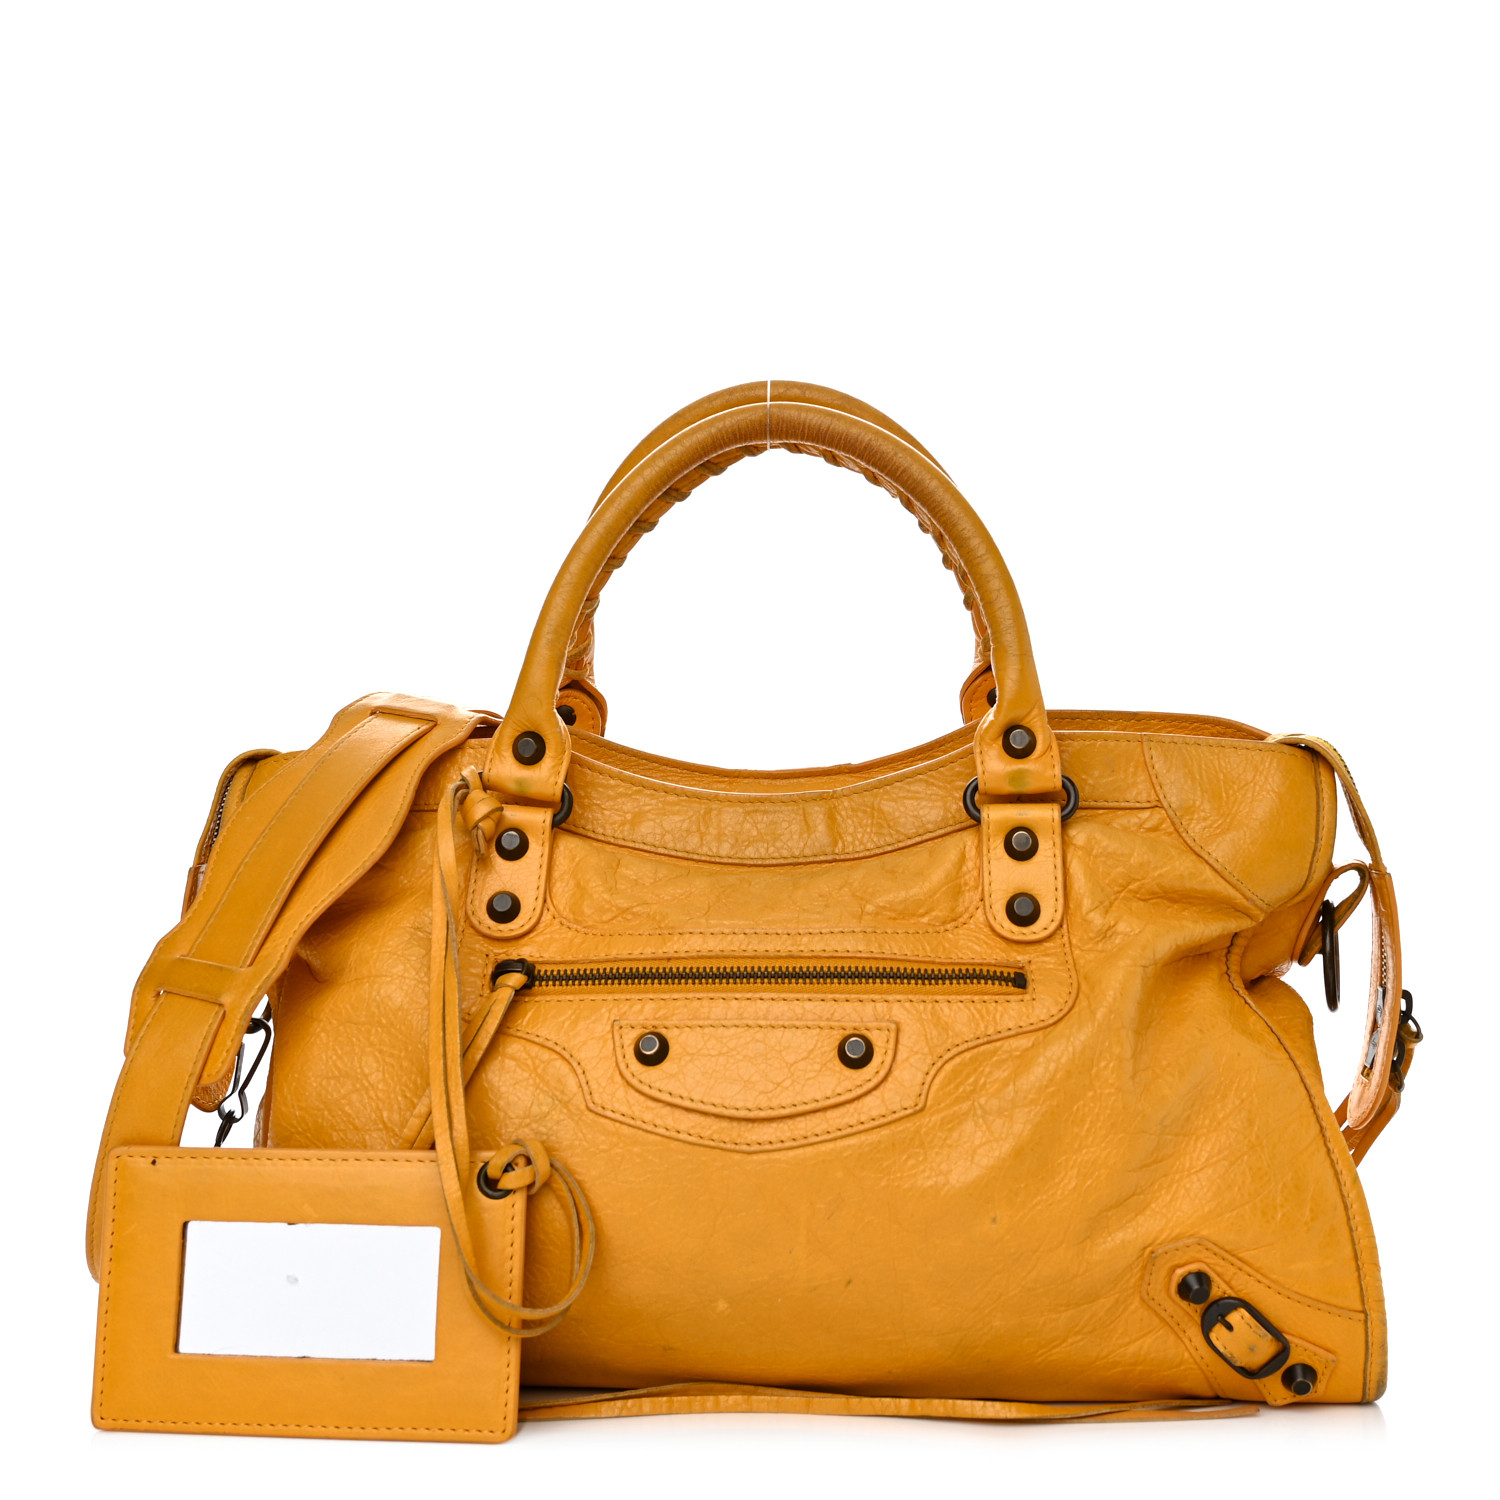 LOOK: Allison Laude's Designer Bag Collection | Preview.ph